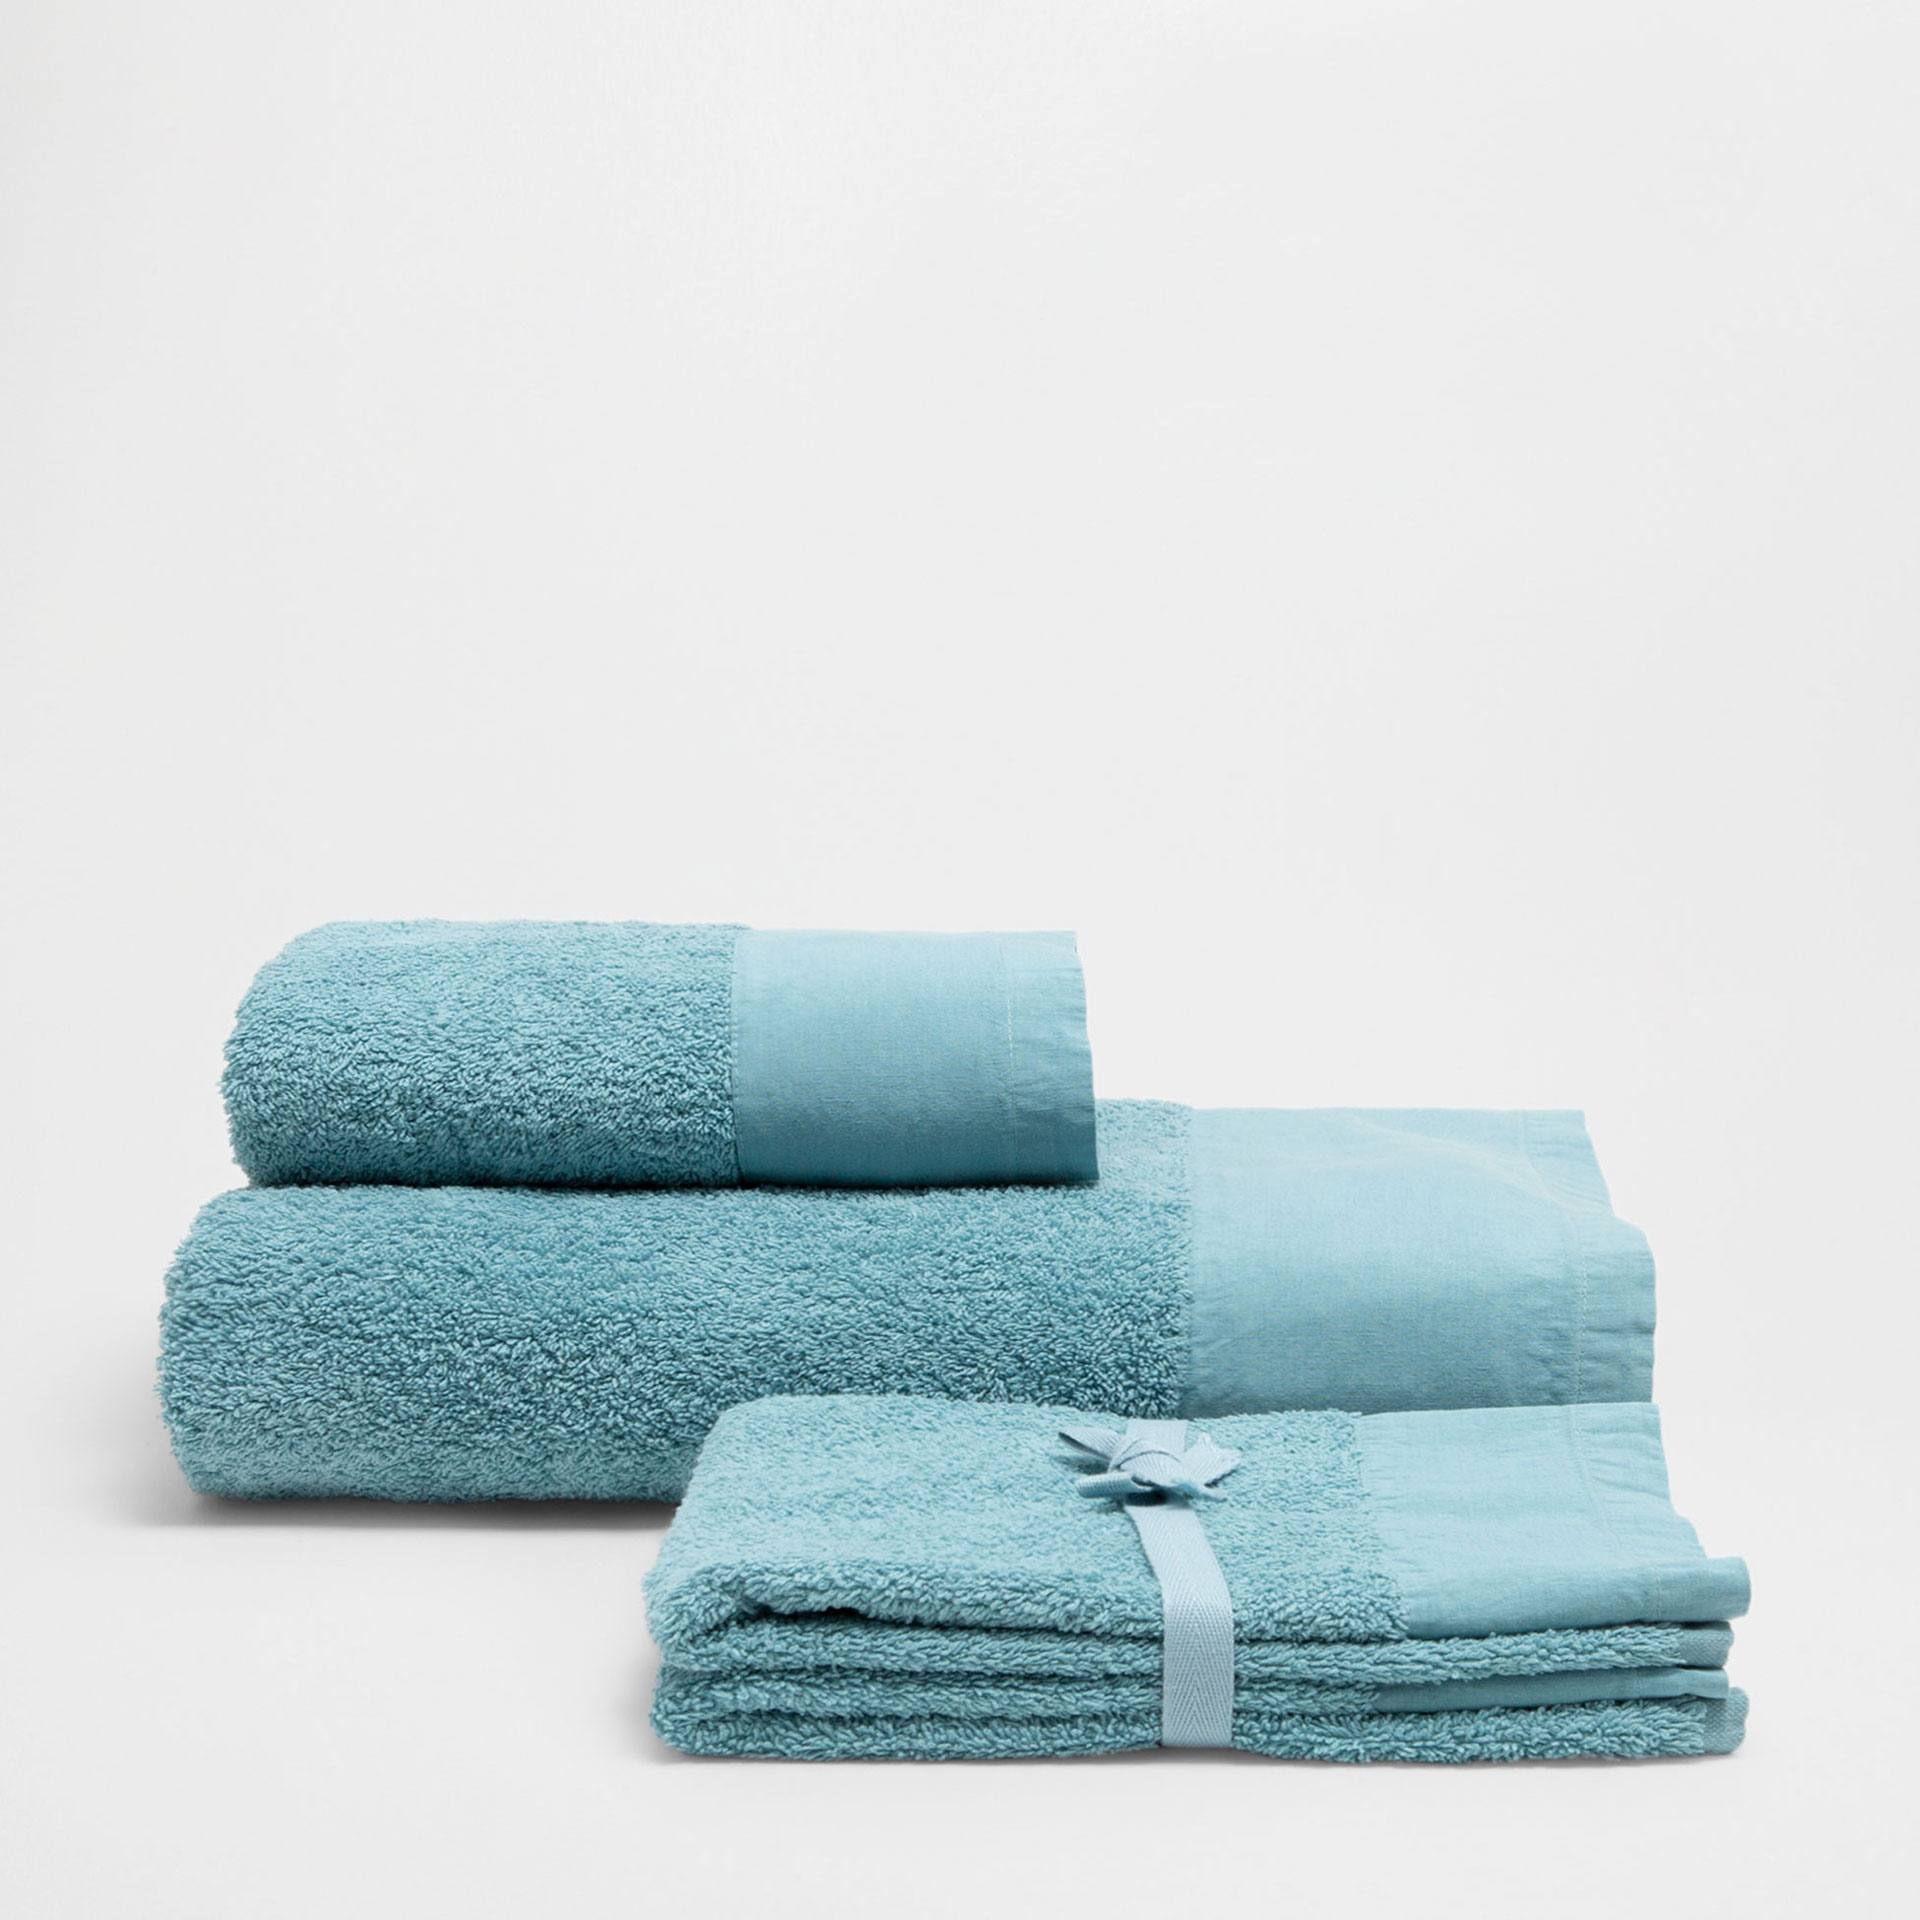 Light blue towels